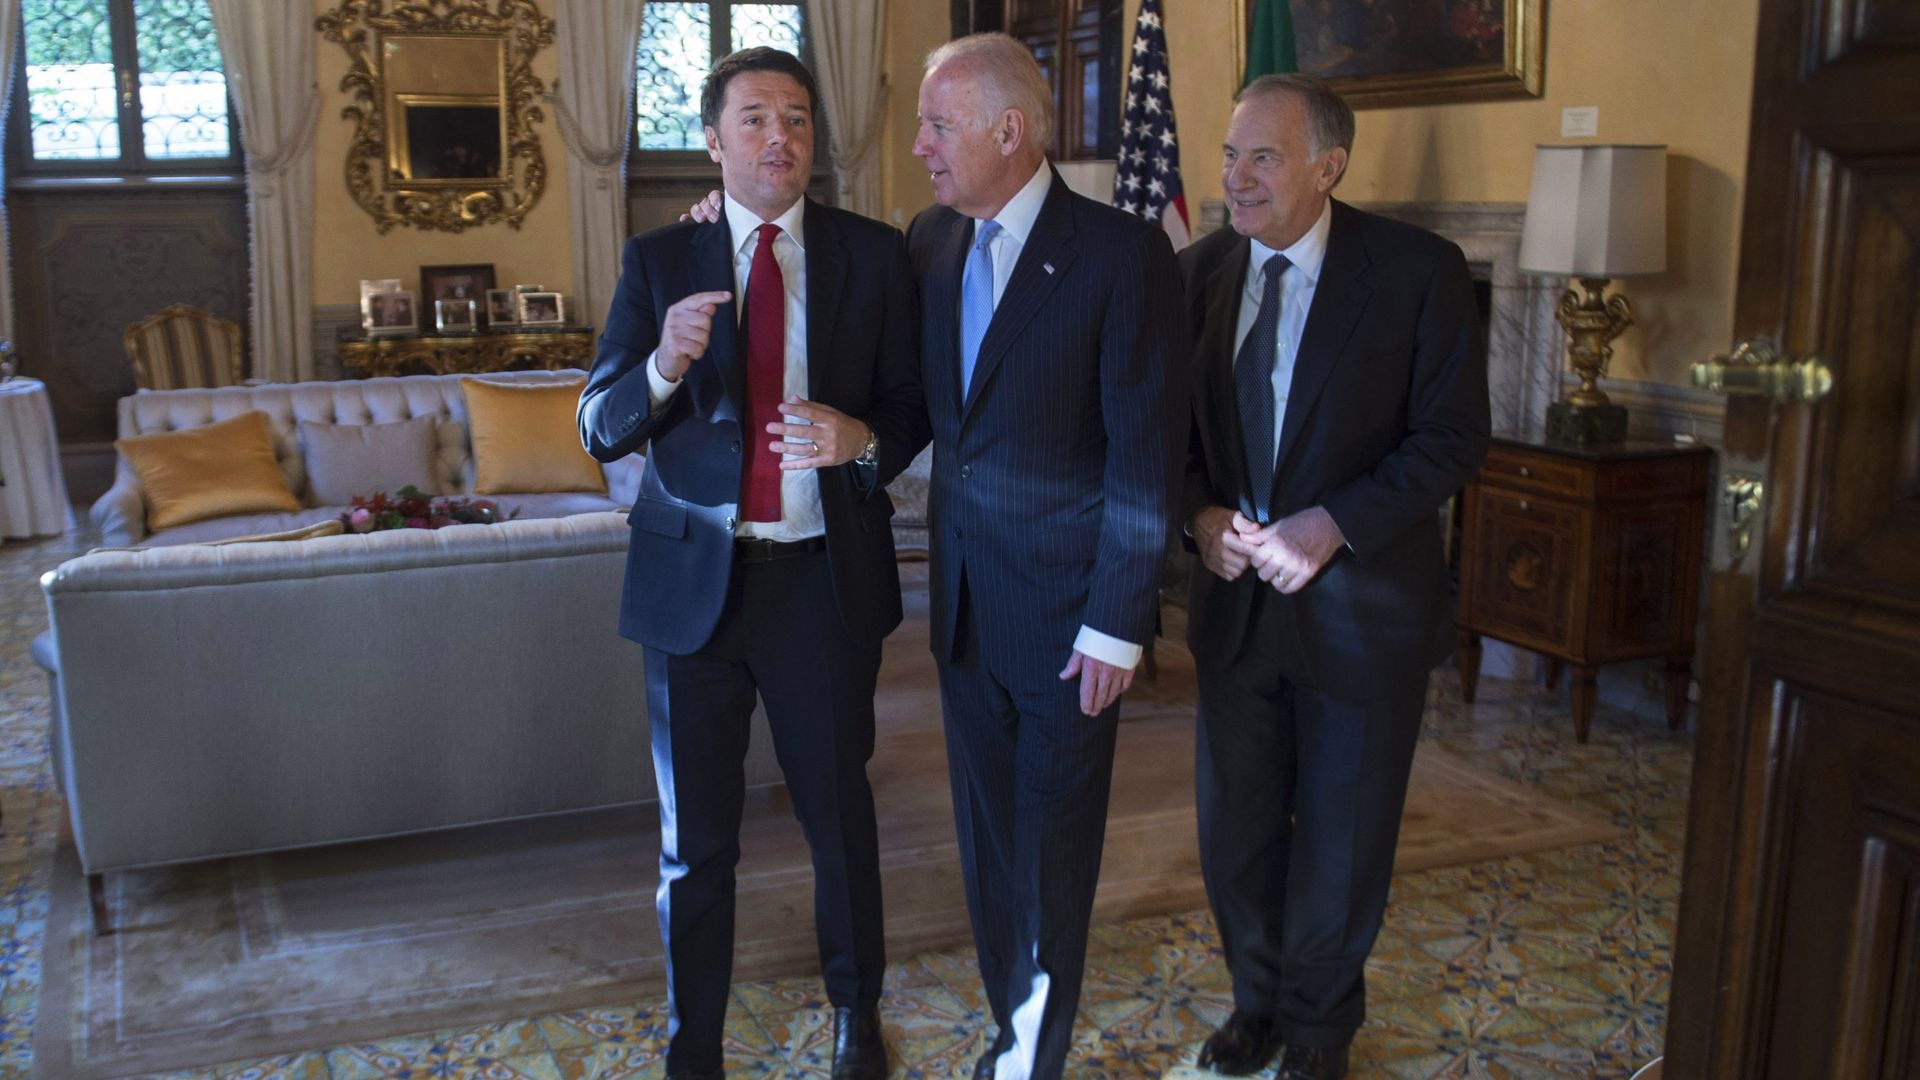 Then-Vice President Joe Biden is seen walking with Italian Prime Minister Matteo Renzi and U.S. Ambassador to Italy John Phillips in 2015.